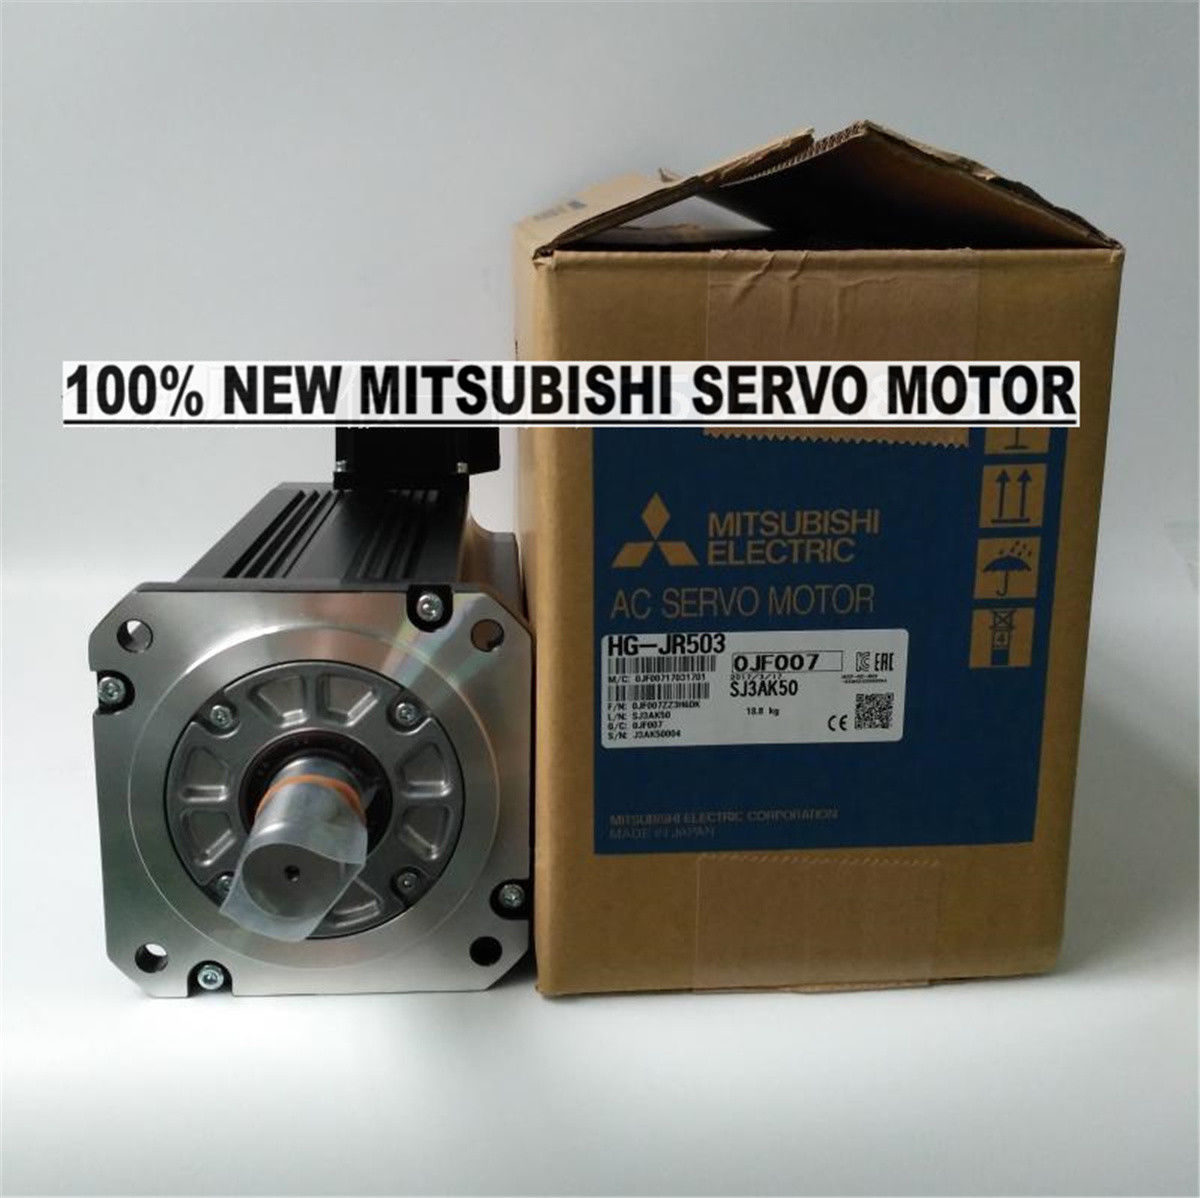 NEW Mitsubishi Servo Motor HG-JR503 in box HGJR503